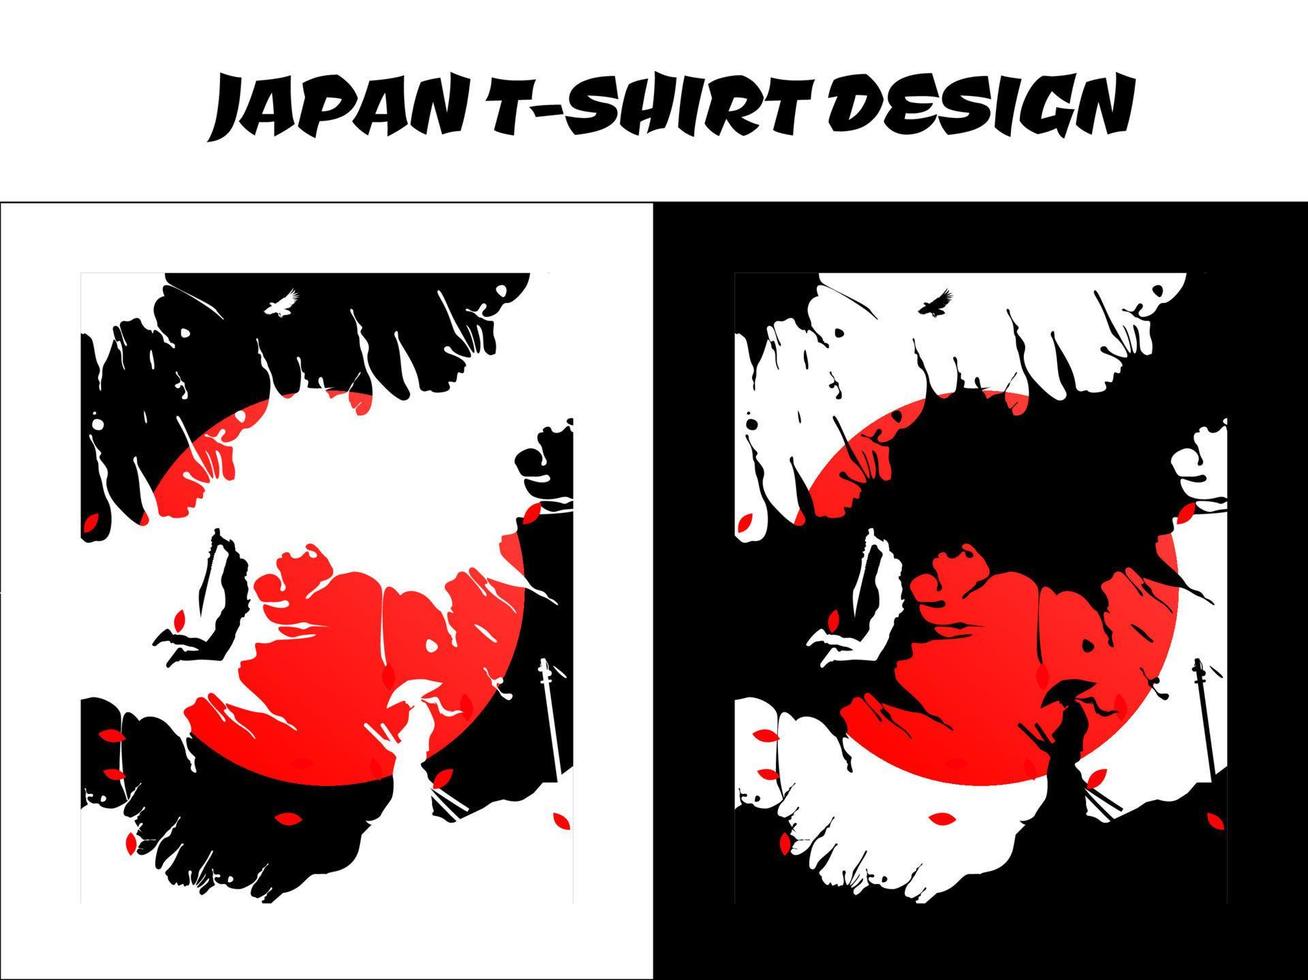 samurai salta para ataque, design de camiseta japonesa, silhueta para um tema japonês, cavaleiro, samurai masculino, silhueta japão samurai vector